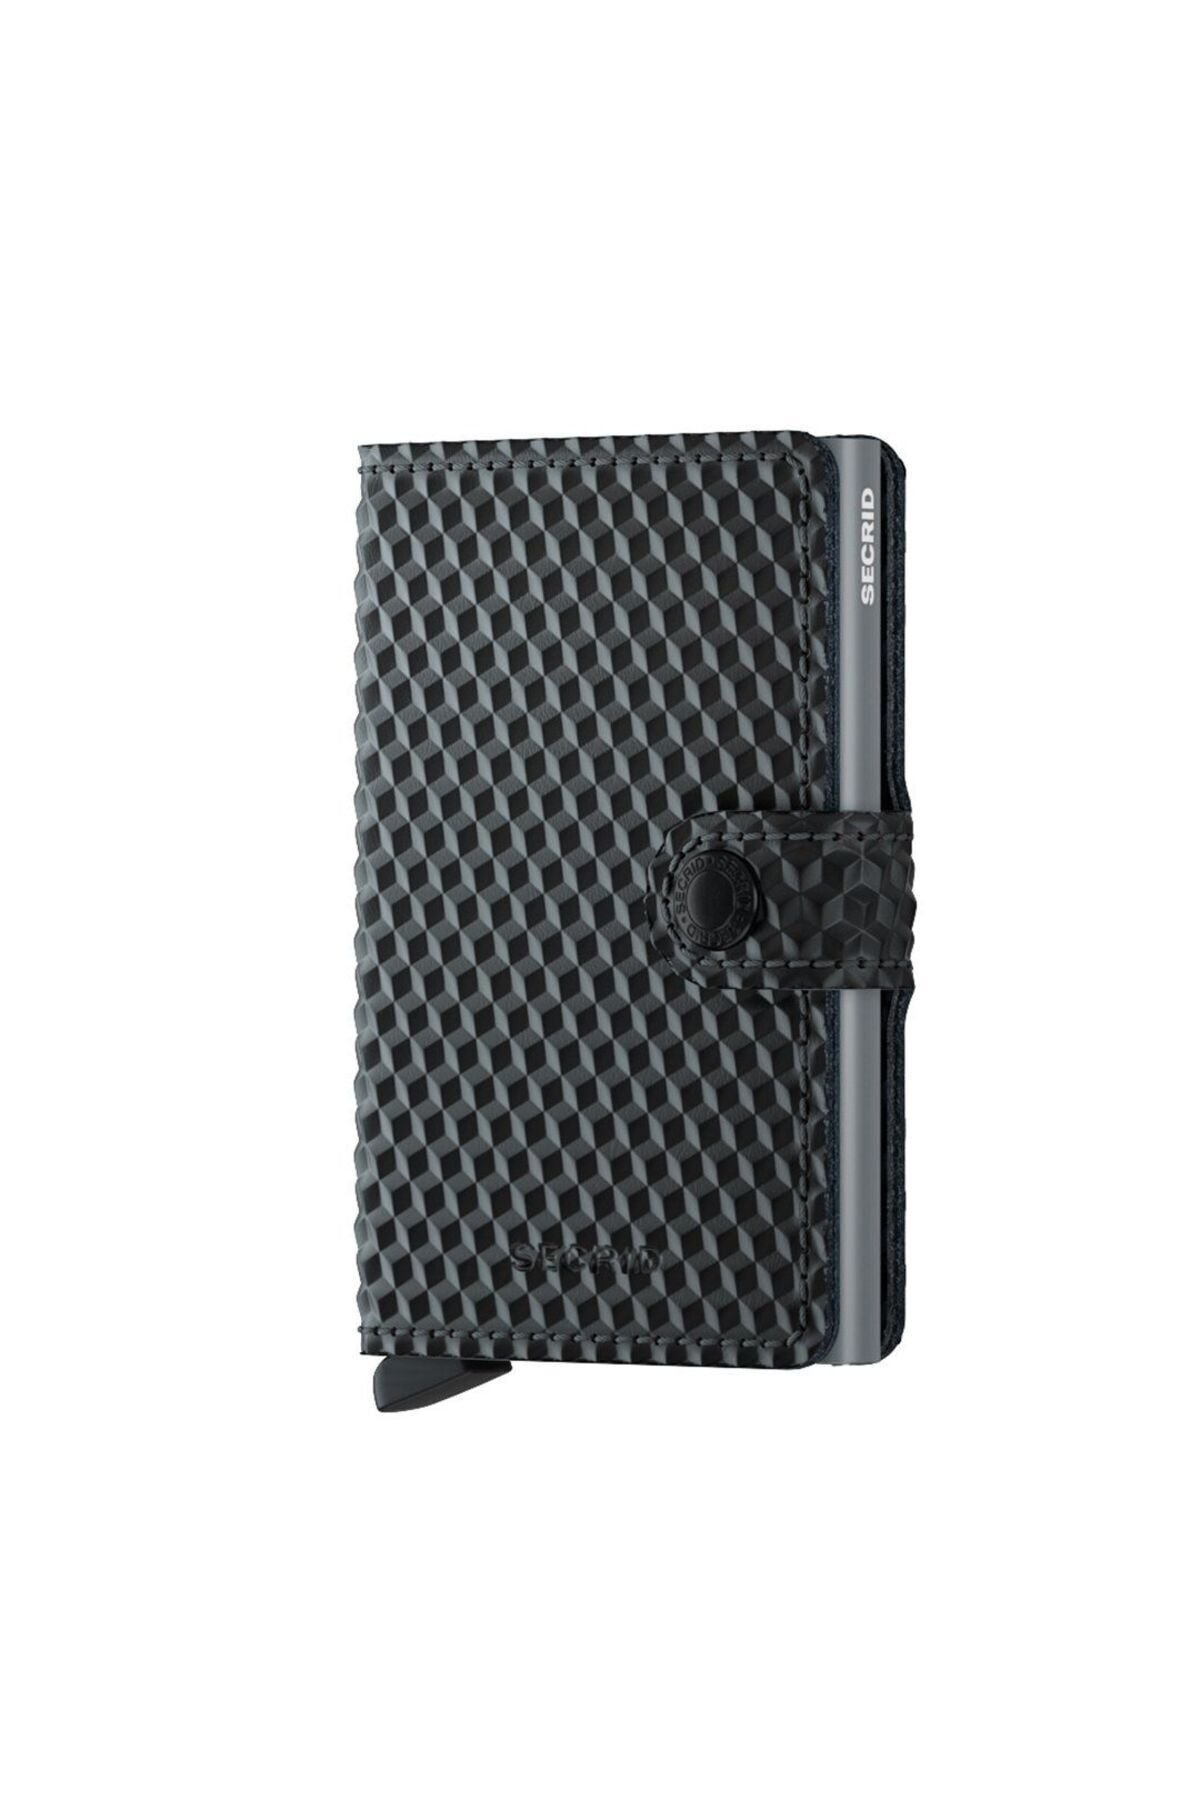 Secrid Miniwallet Cubic Black Titanium, N/A - %100 Orjinal Avrupa Derisi Cüzdan